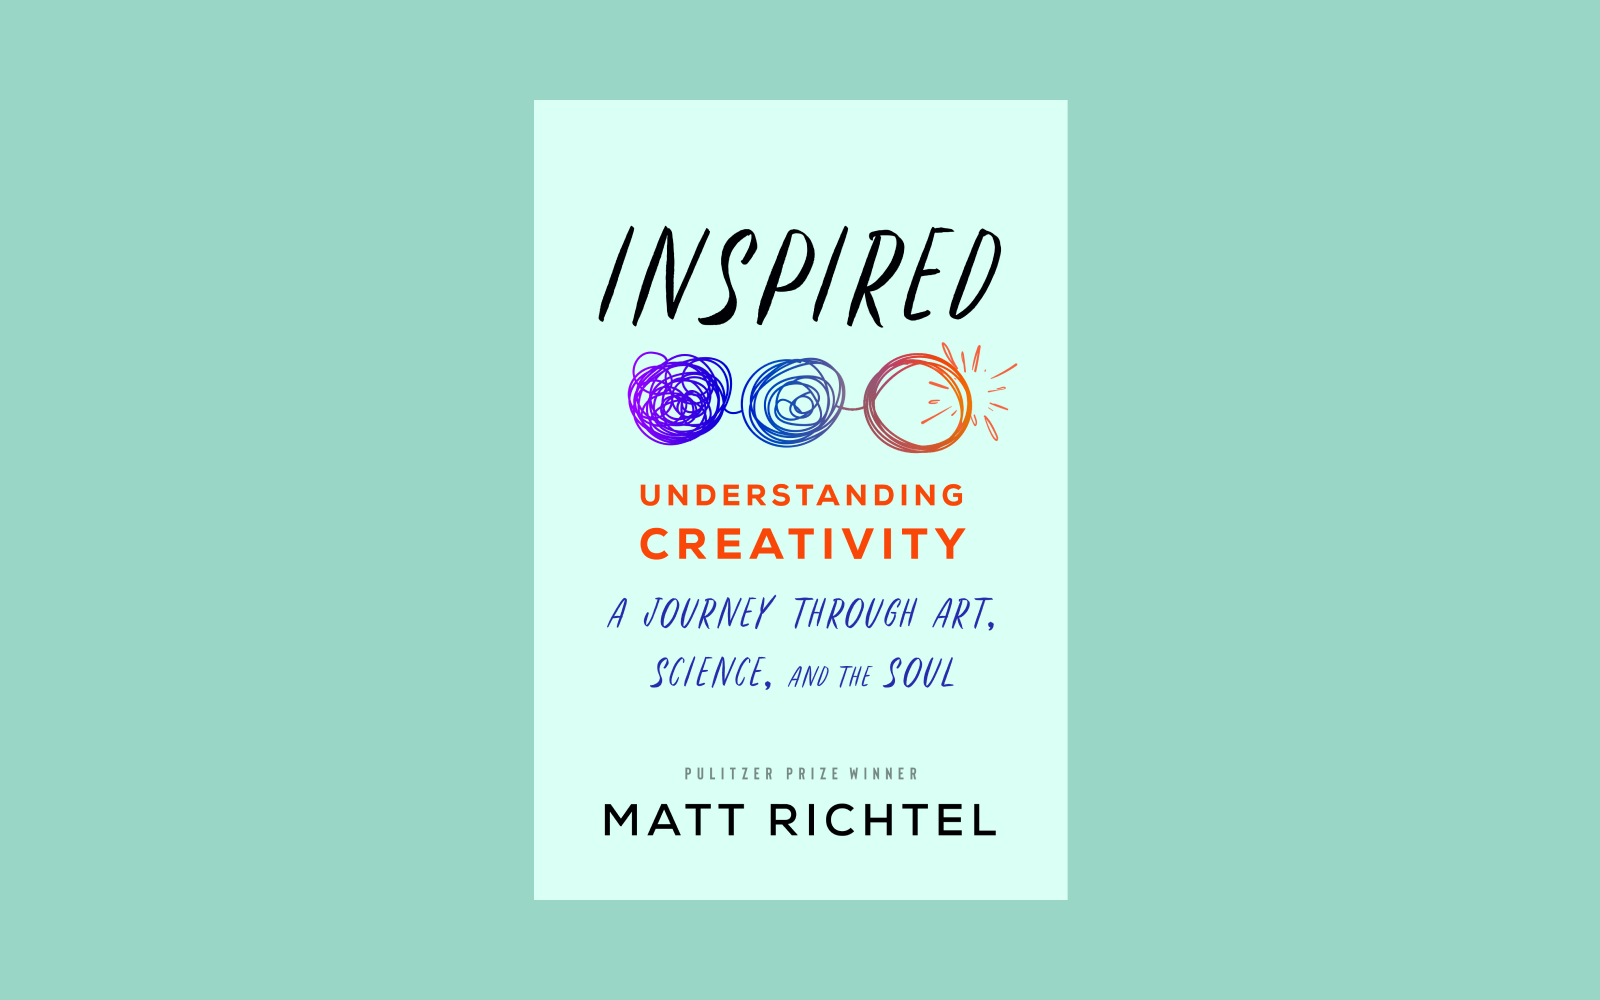 Inspired book by Matt Richtel on creativity